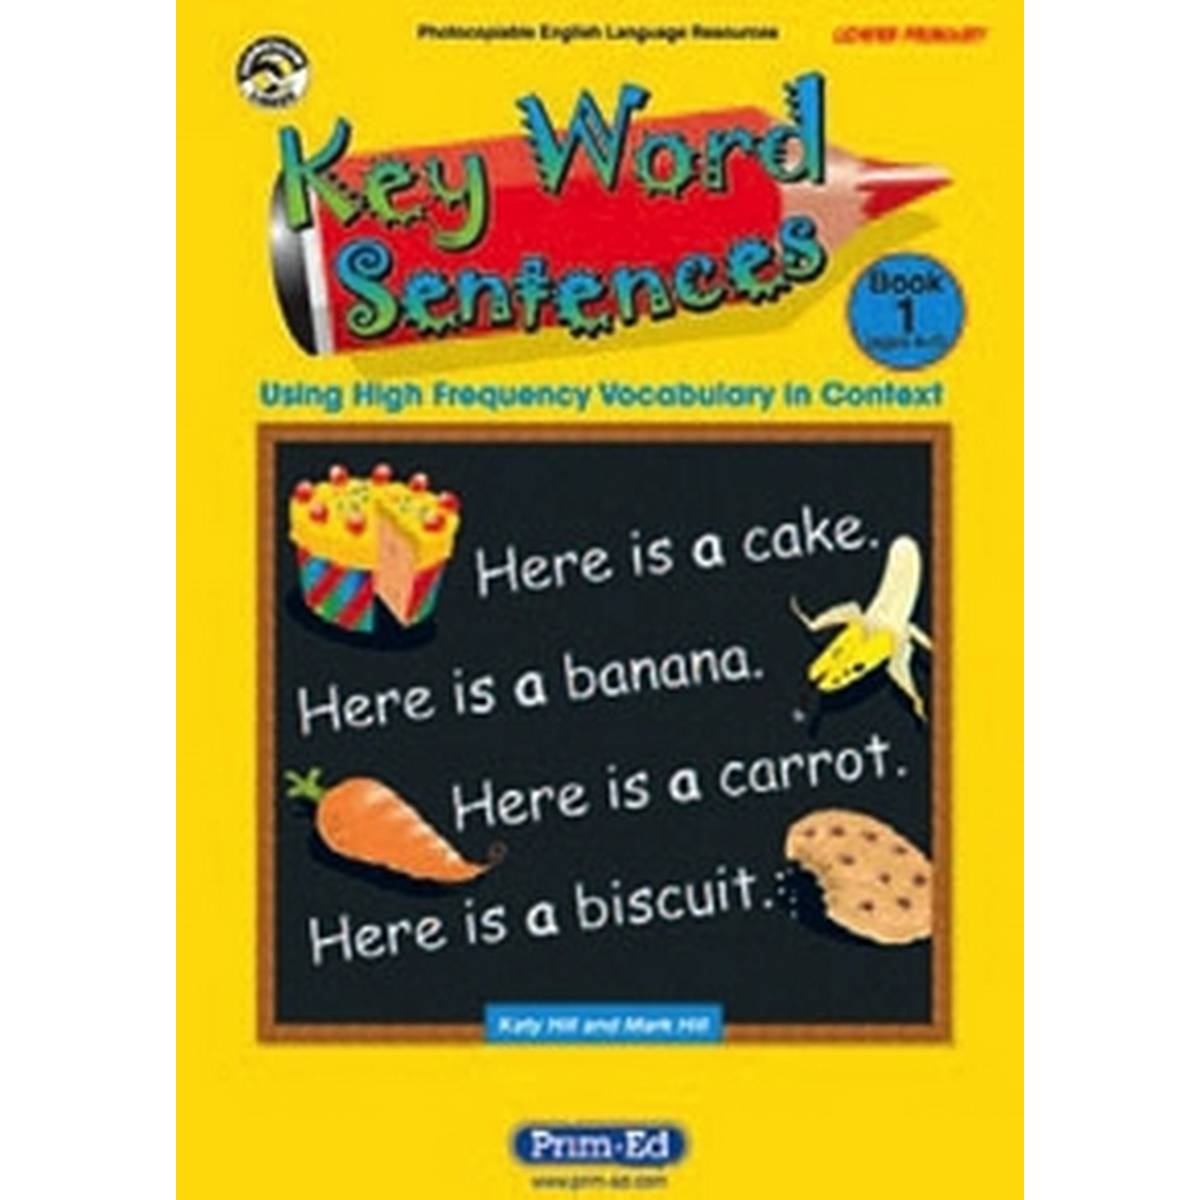 Key Word Sentences Book 1